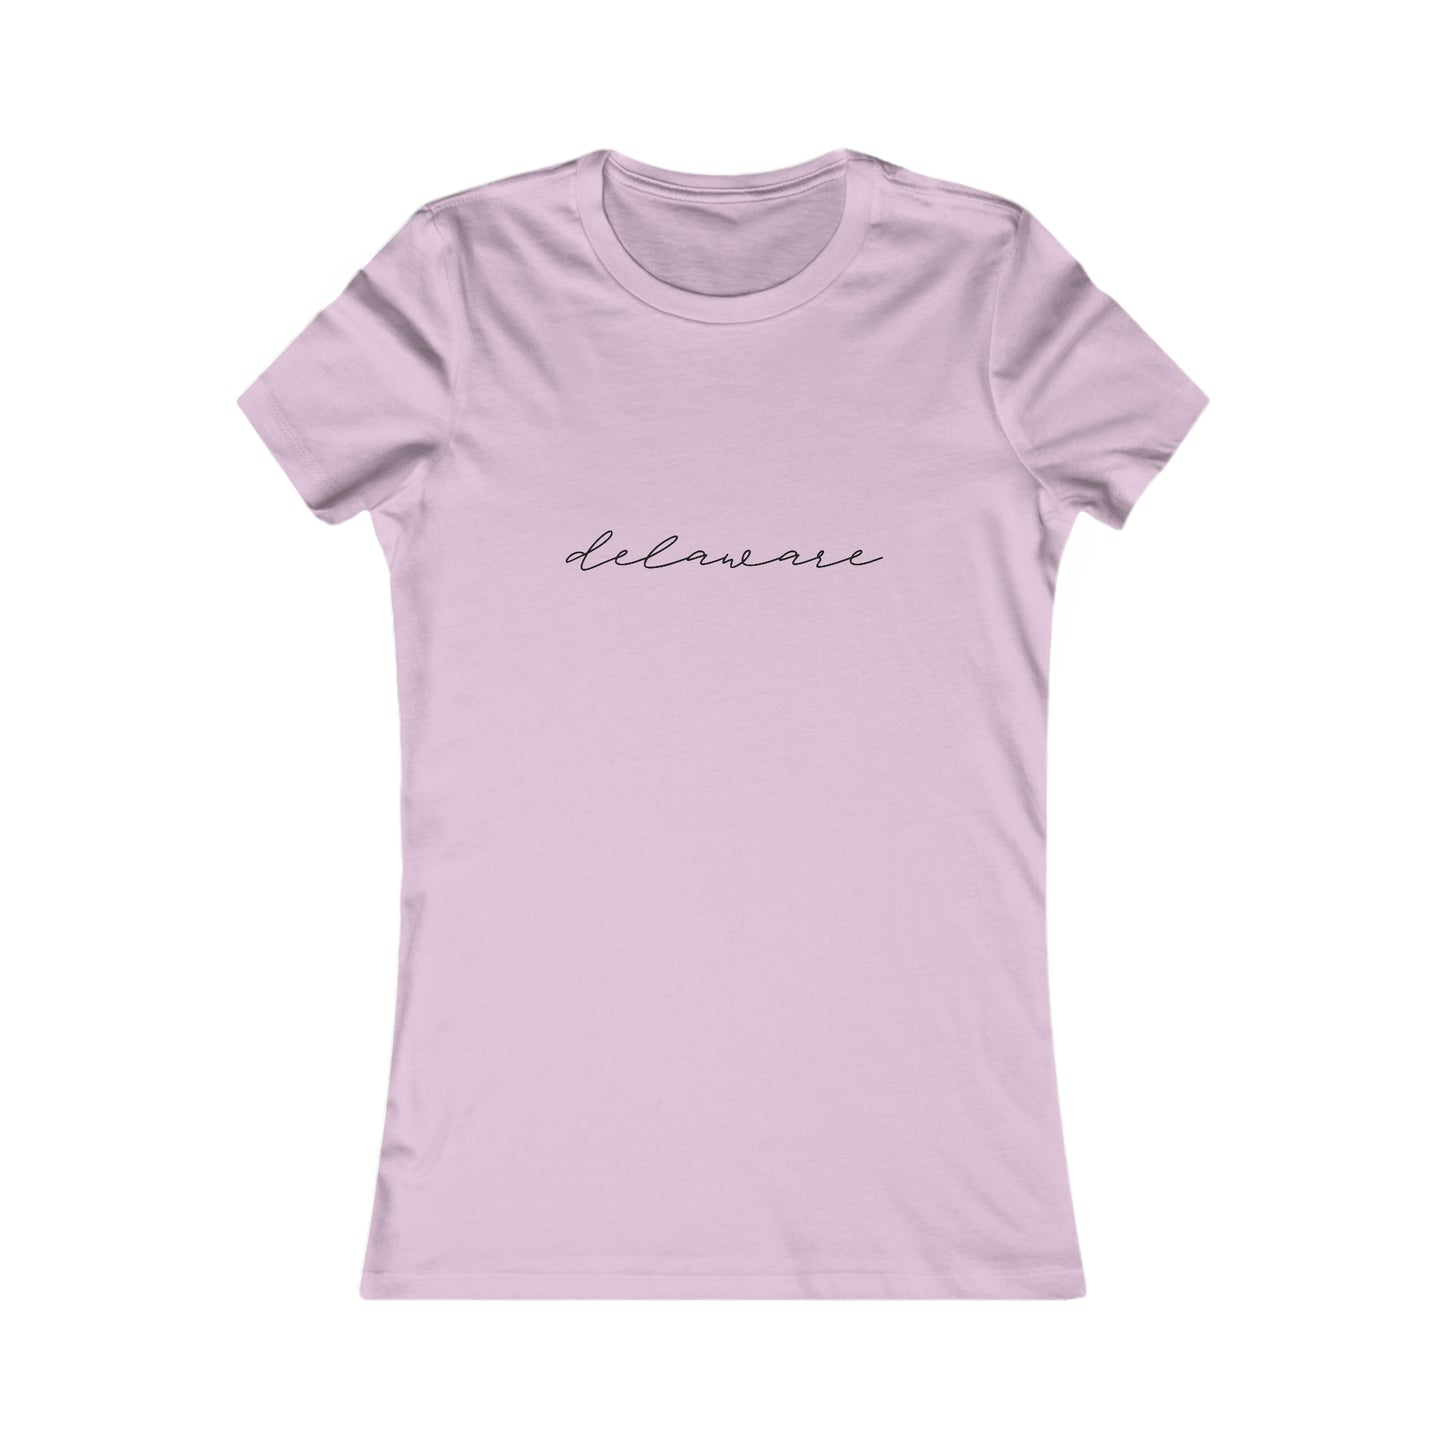 Delaware Cursive Women's Shirt